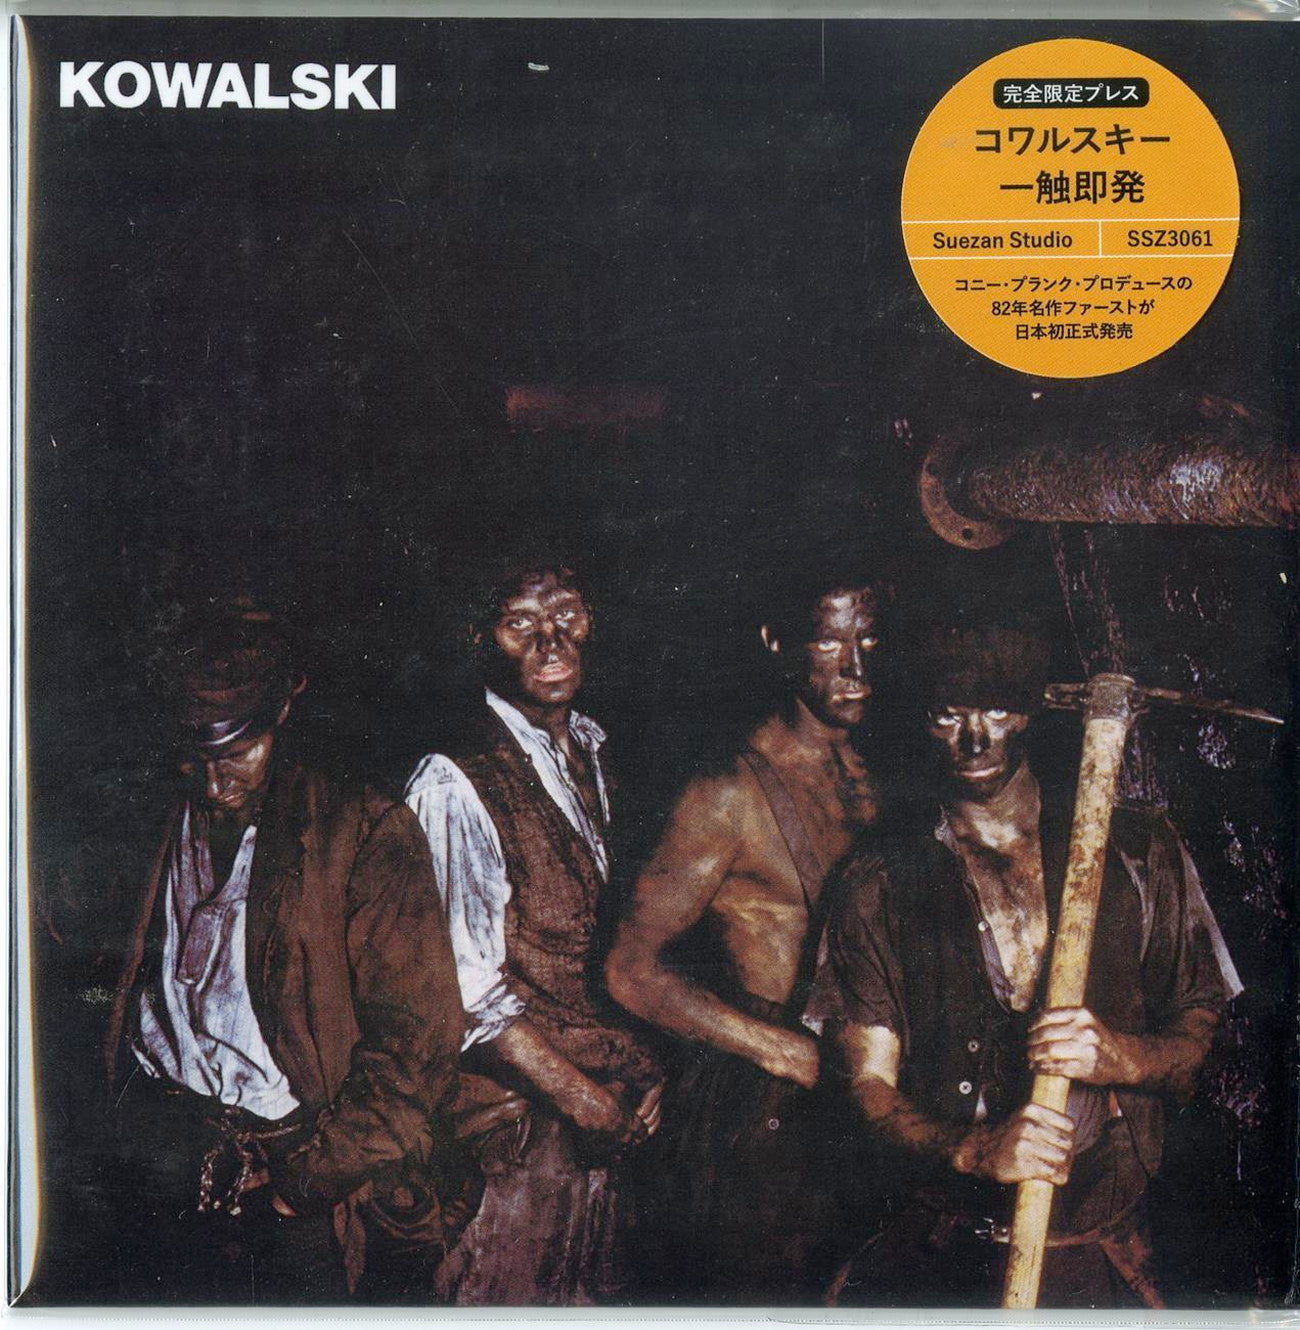 Kowalski - Schlagende Wetter - Japan  Mini LP CD Bonus Track Limited Edition